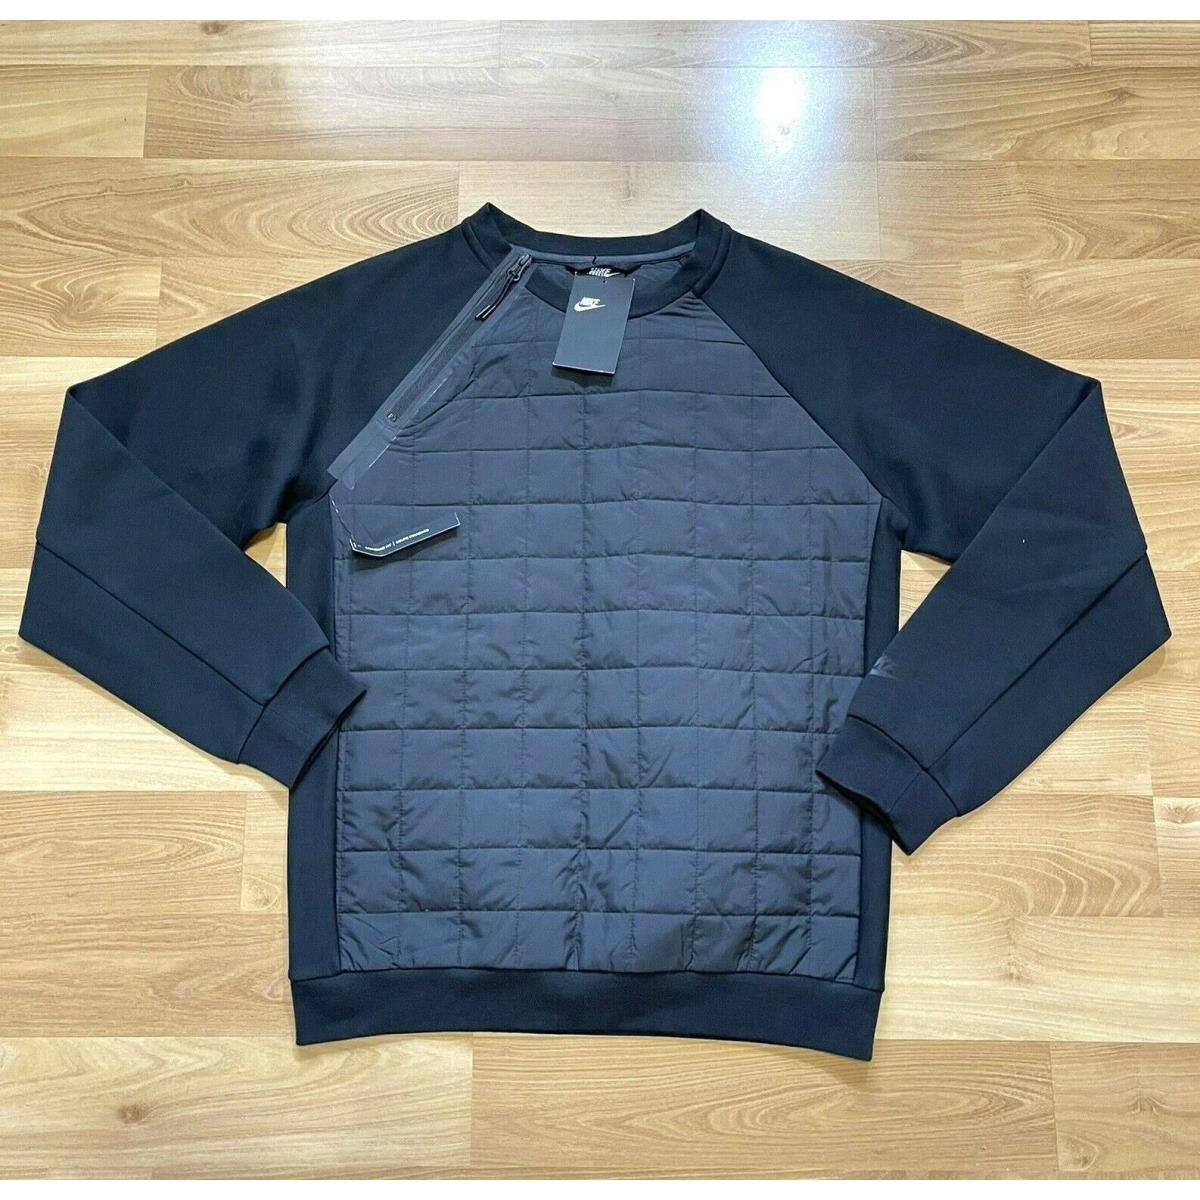 Nike Tech Pack Quilted Crew Size S Men Winter Sweatshirt Black BV3697-010